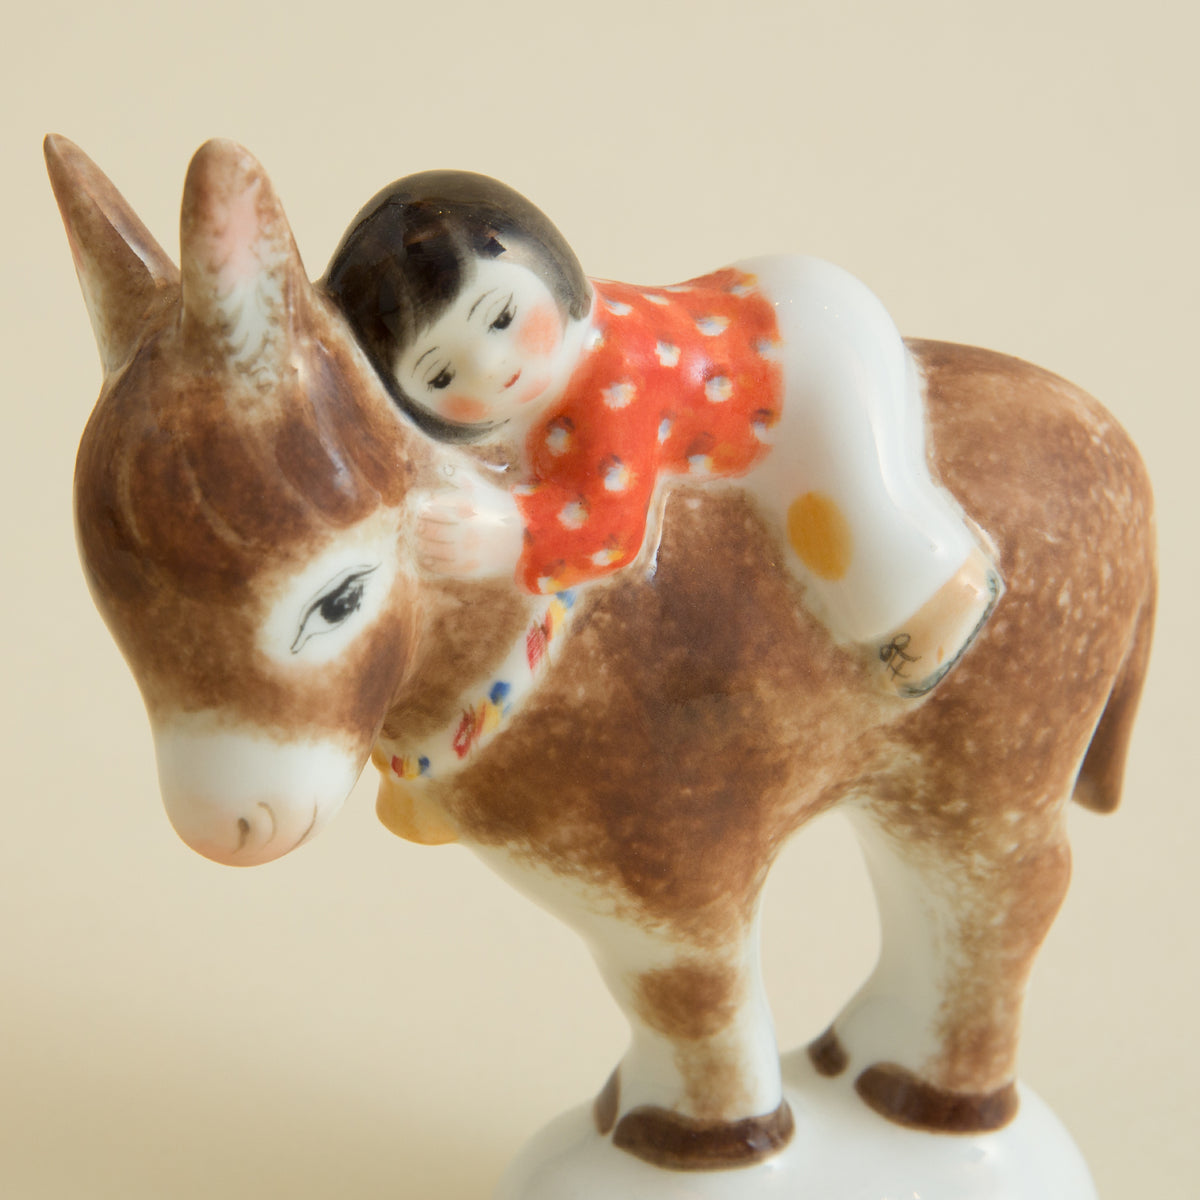 Child & Donkey Figurine